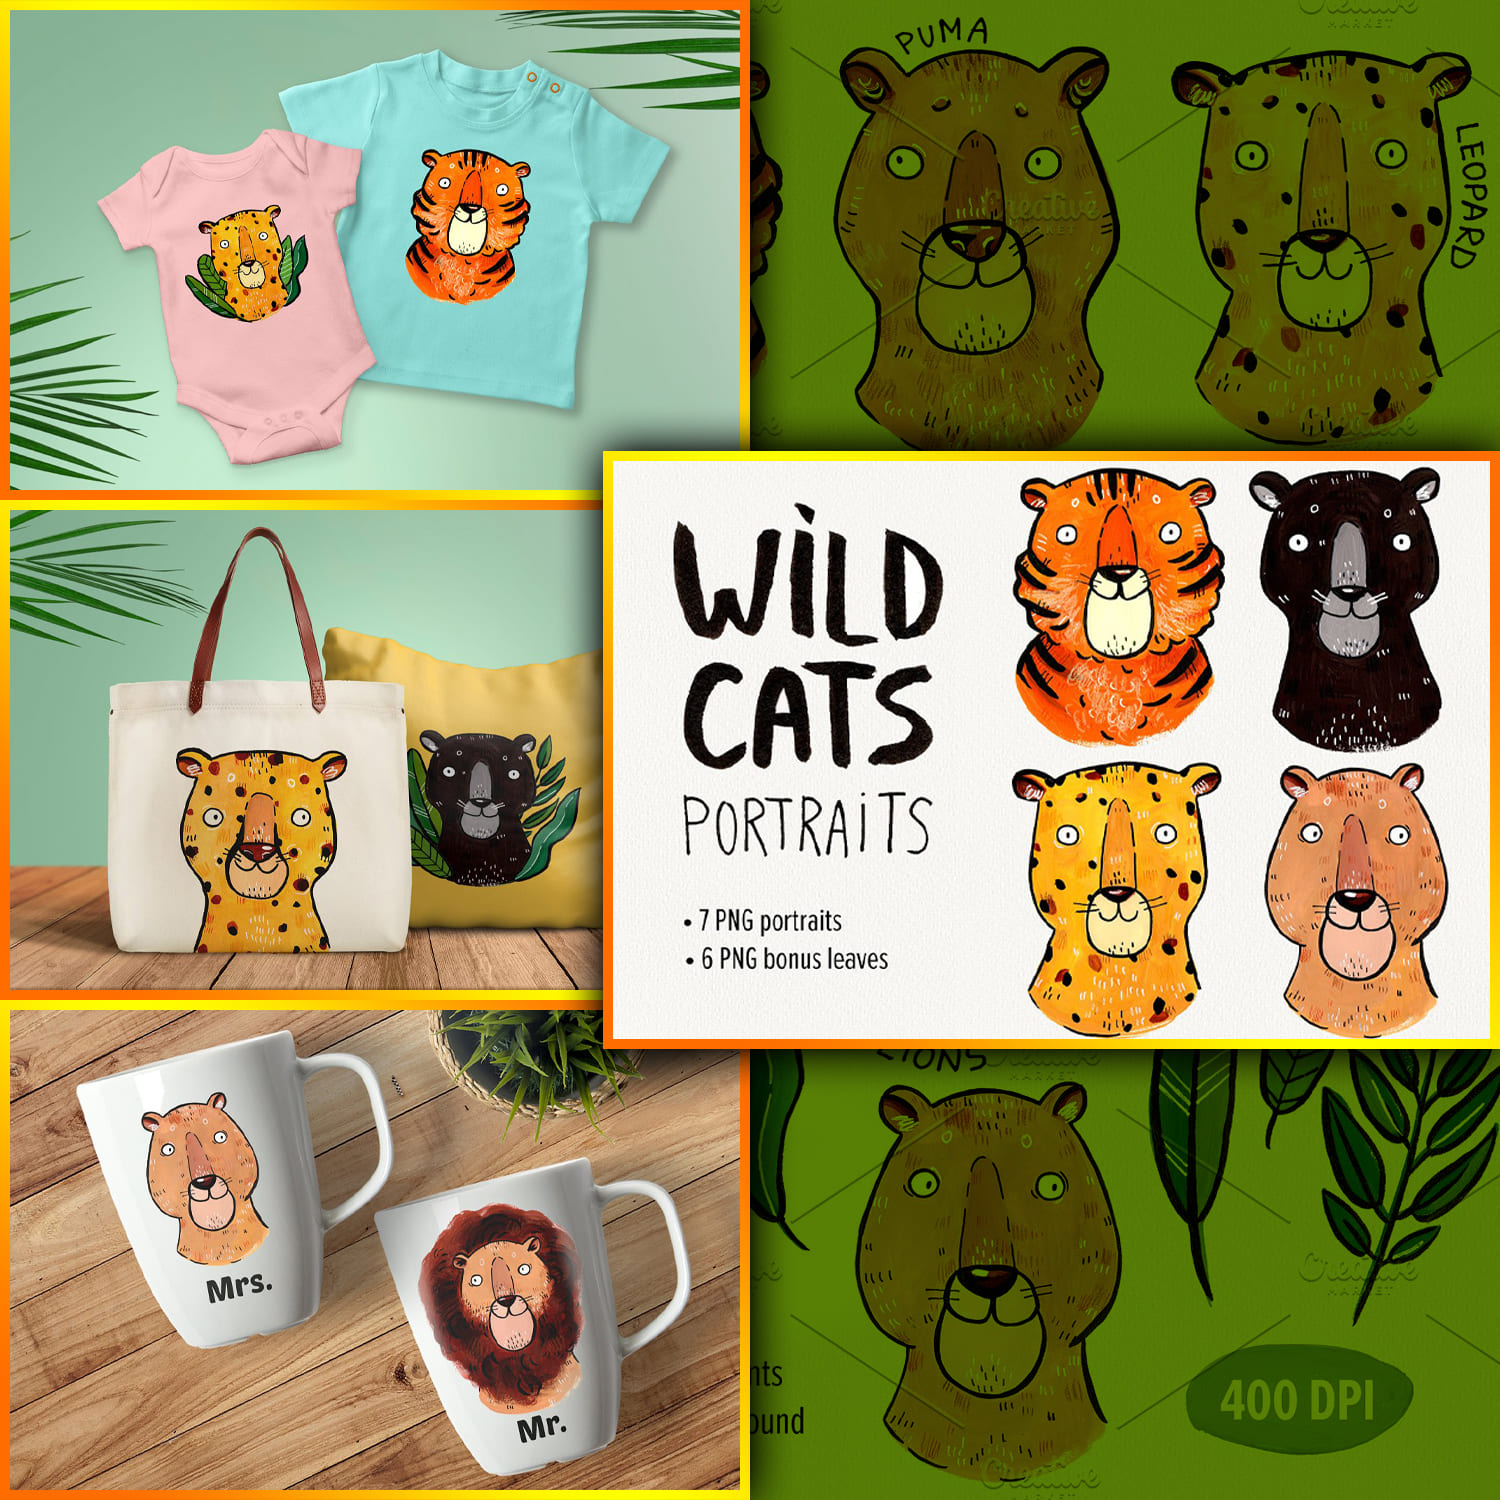 Wild Cats portraits set cover.